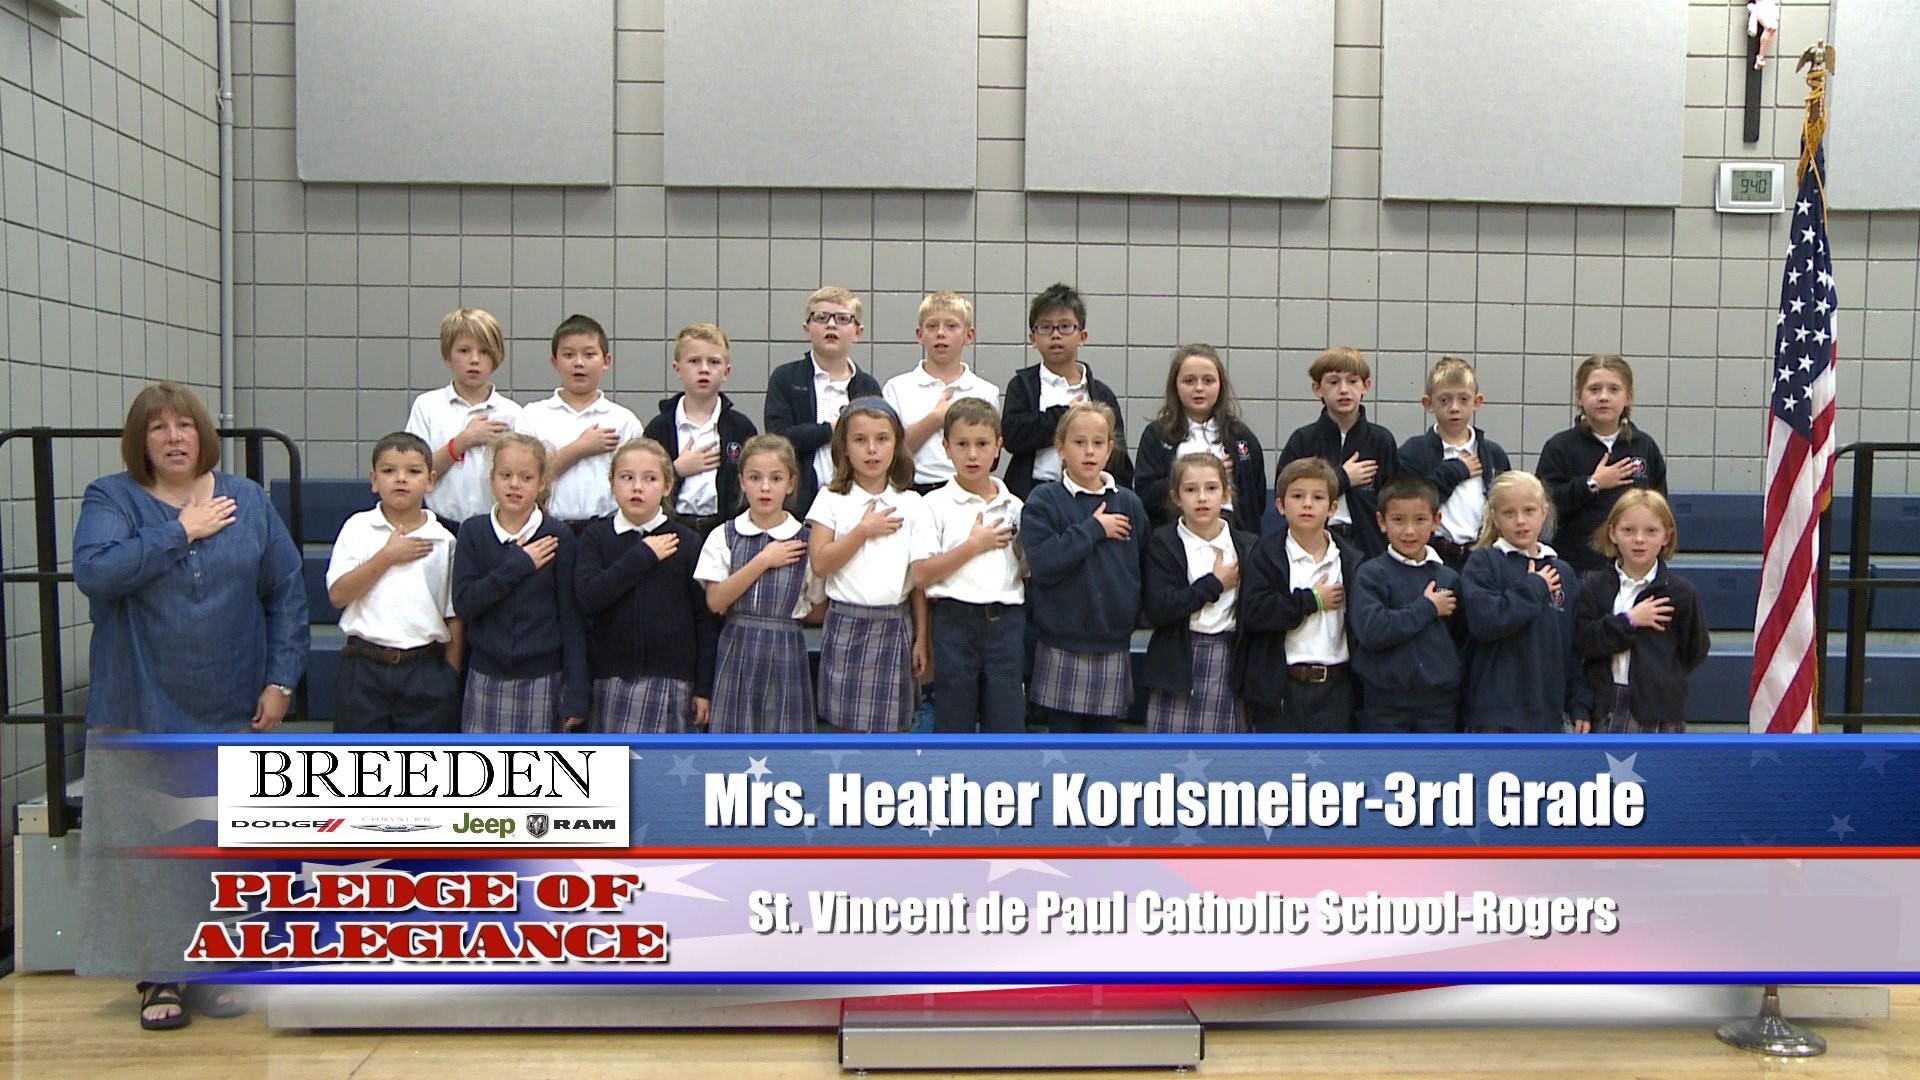 Mrs. Healther Kordsmeier  3rd Grade  St. Vincent de Paul Catholic School - Rogers